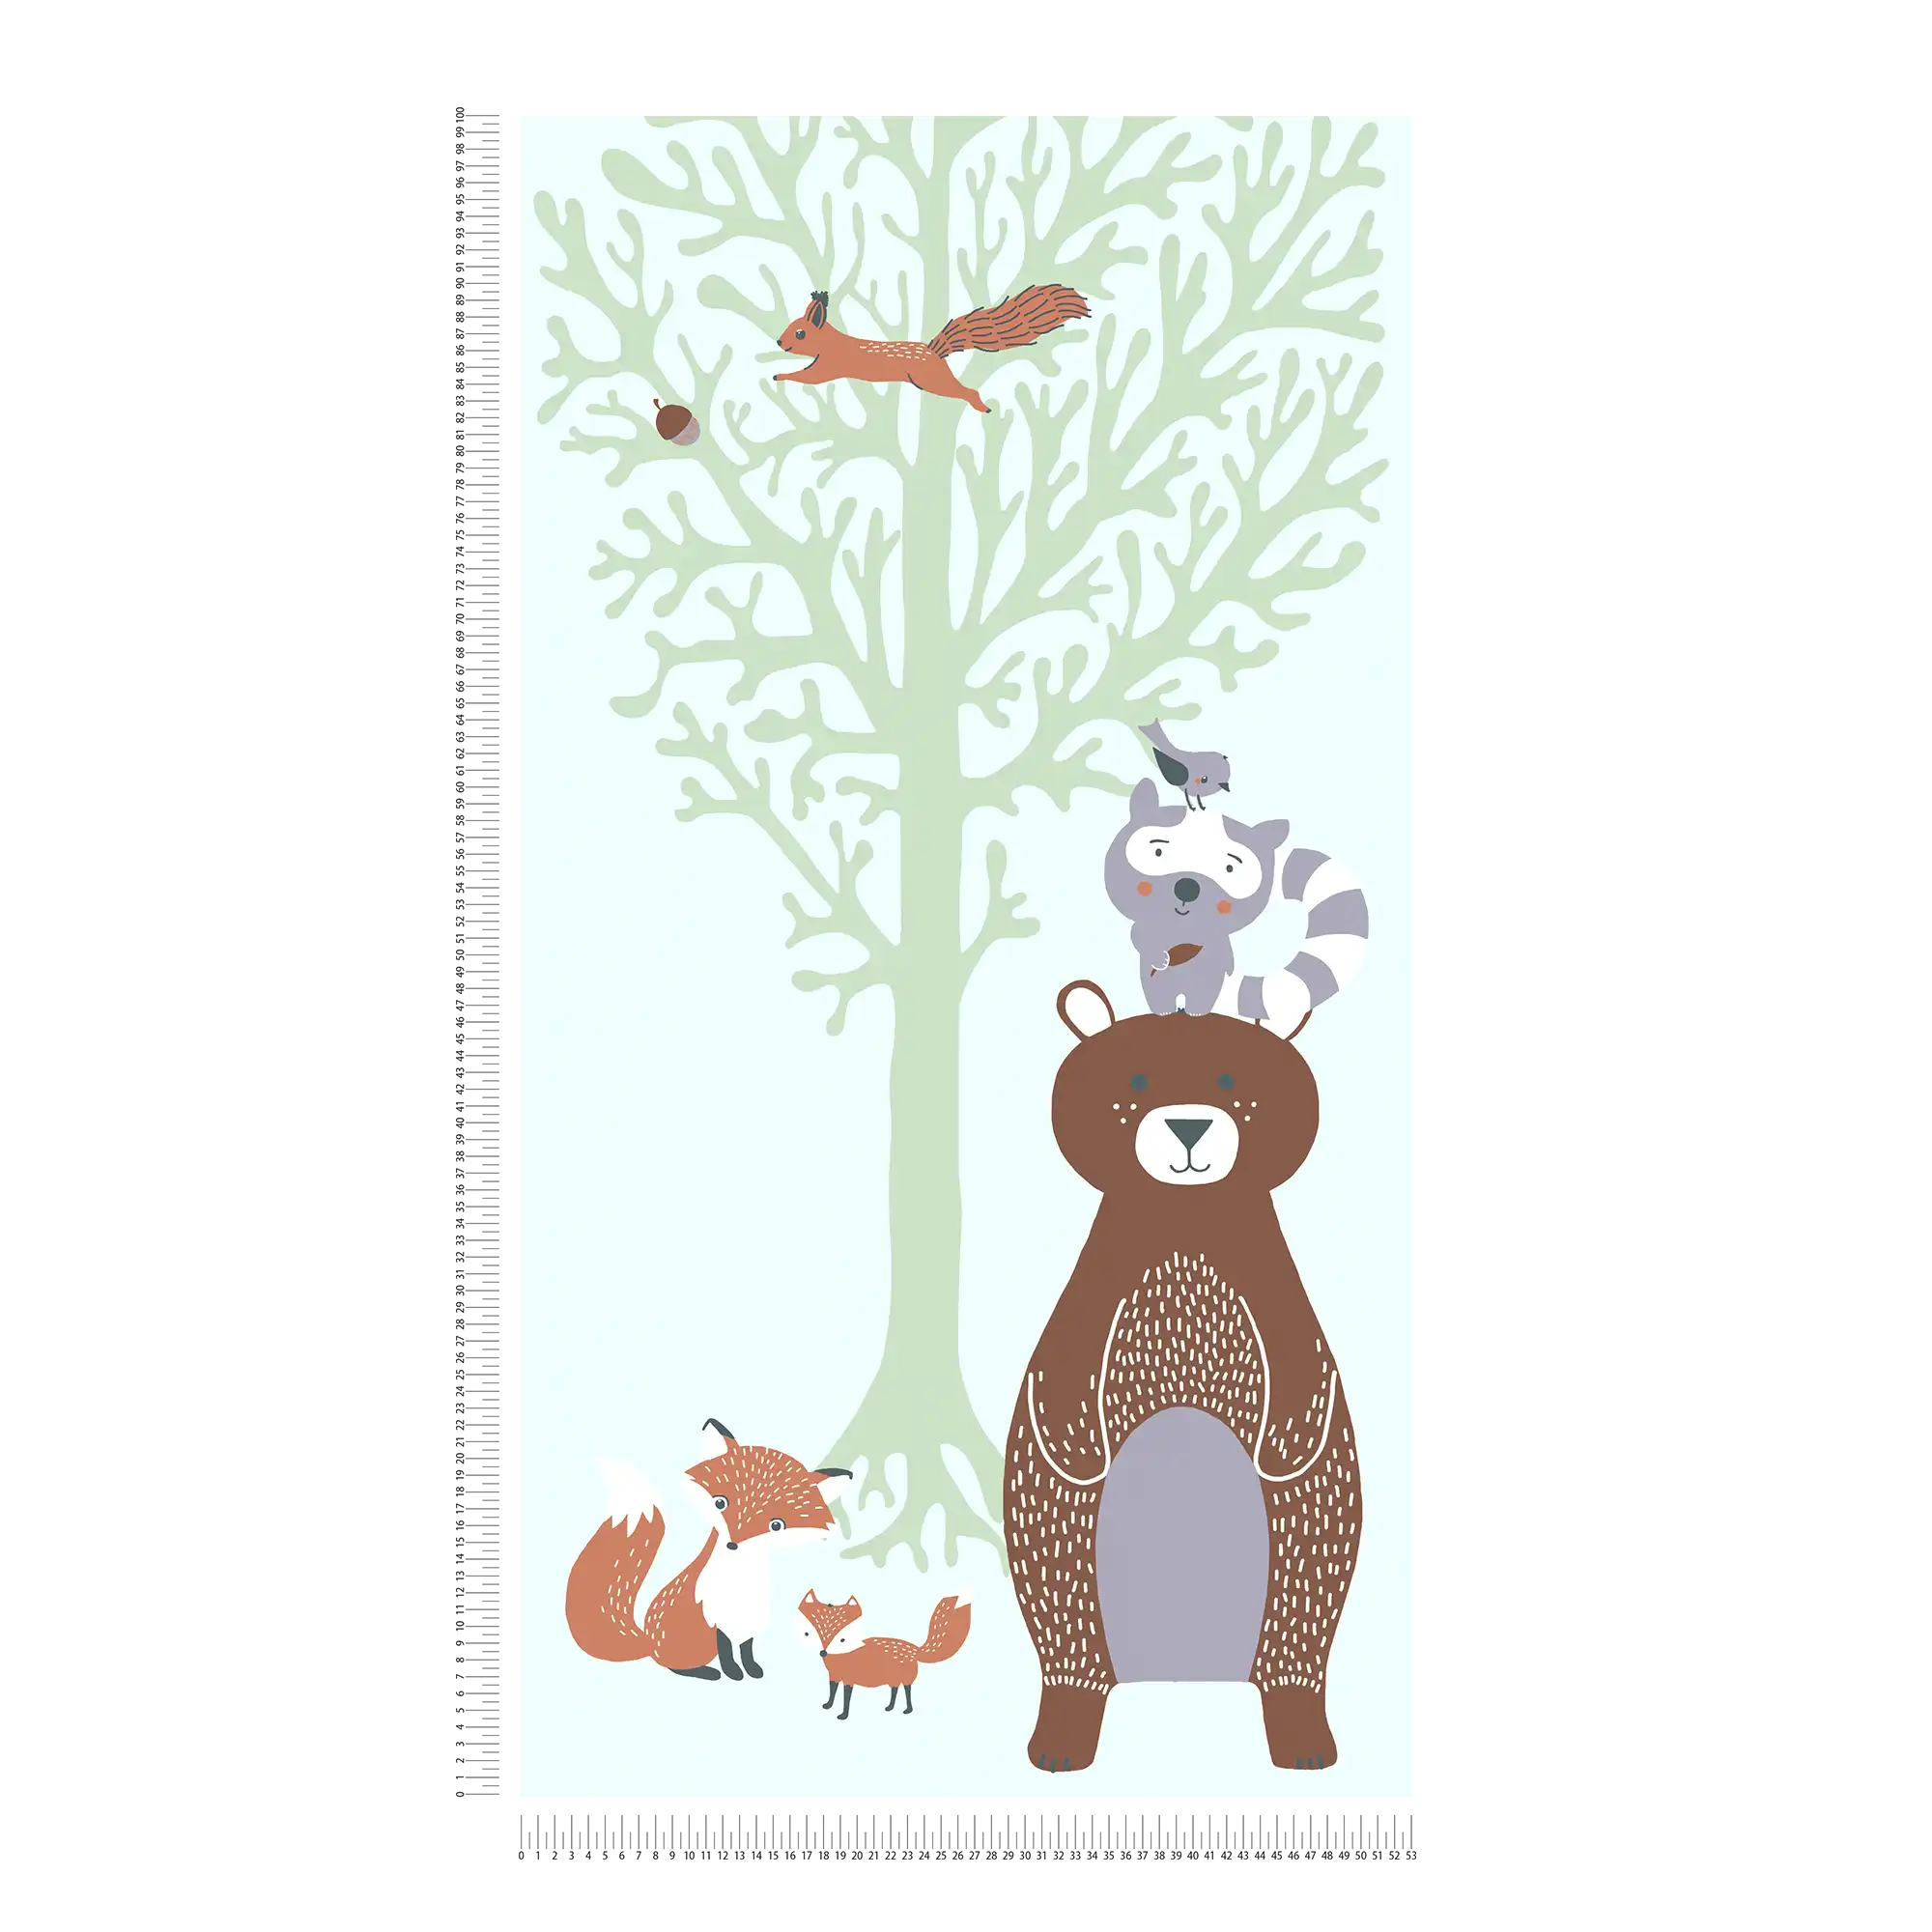             Nursery wallpaper boys forest animals - green, brown, grey
        